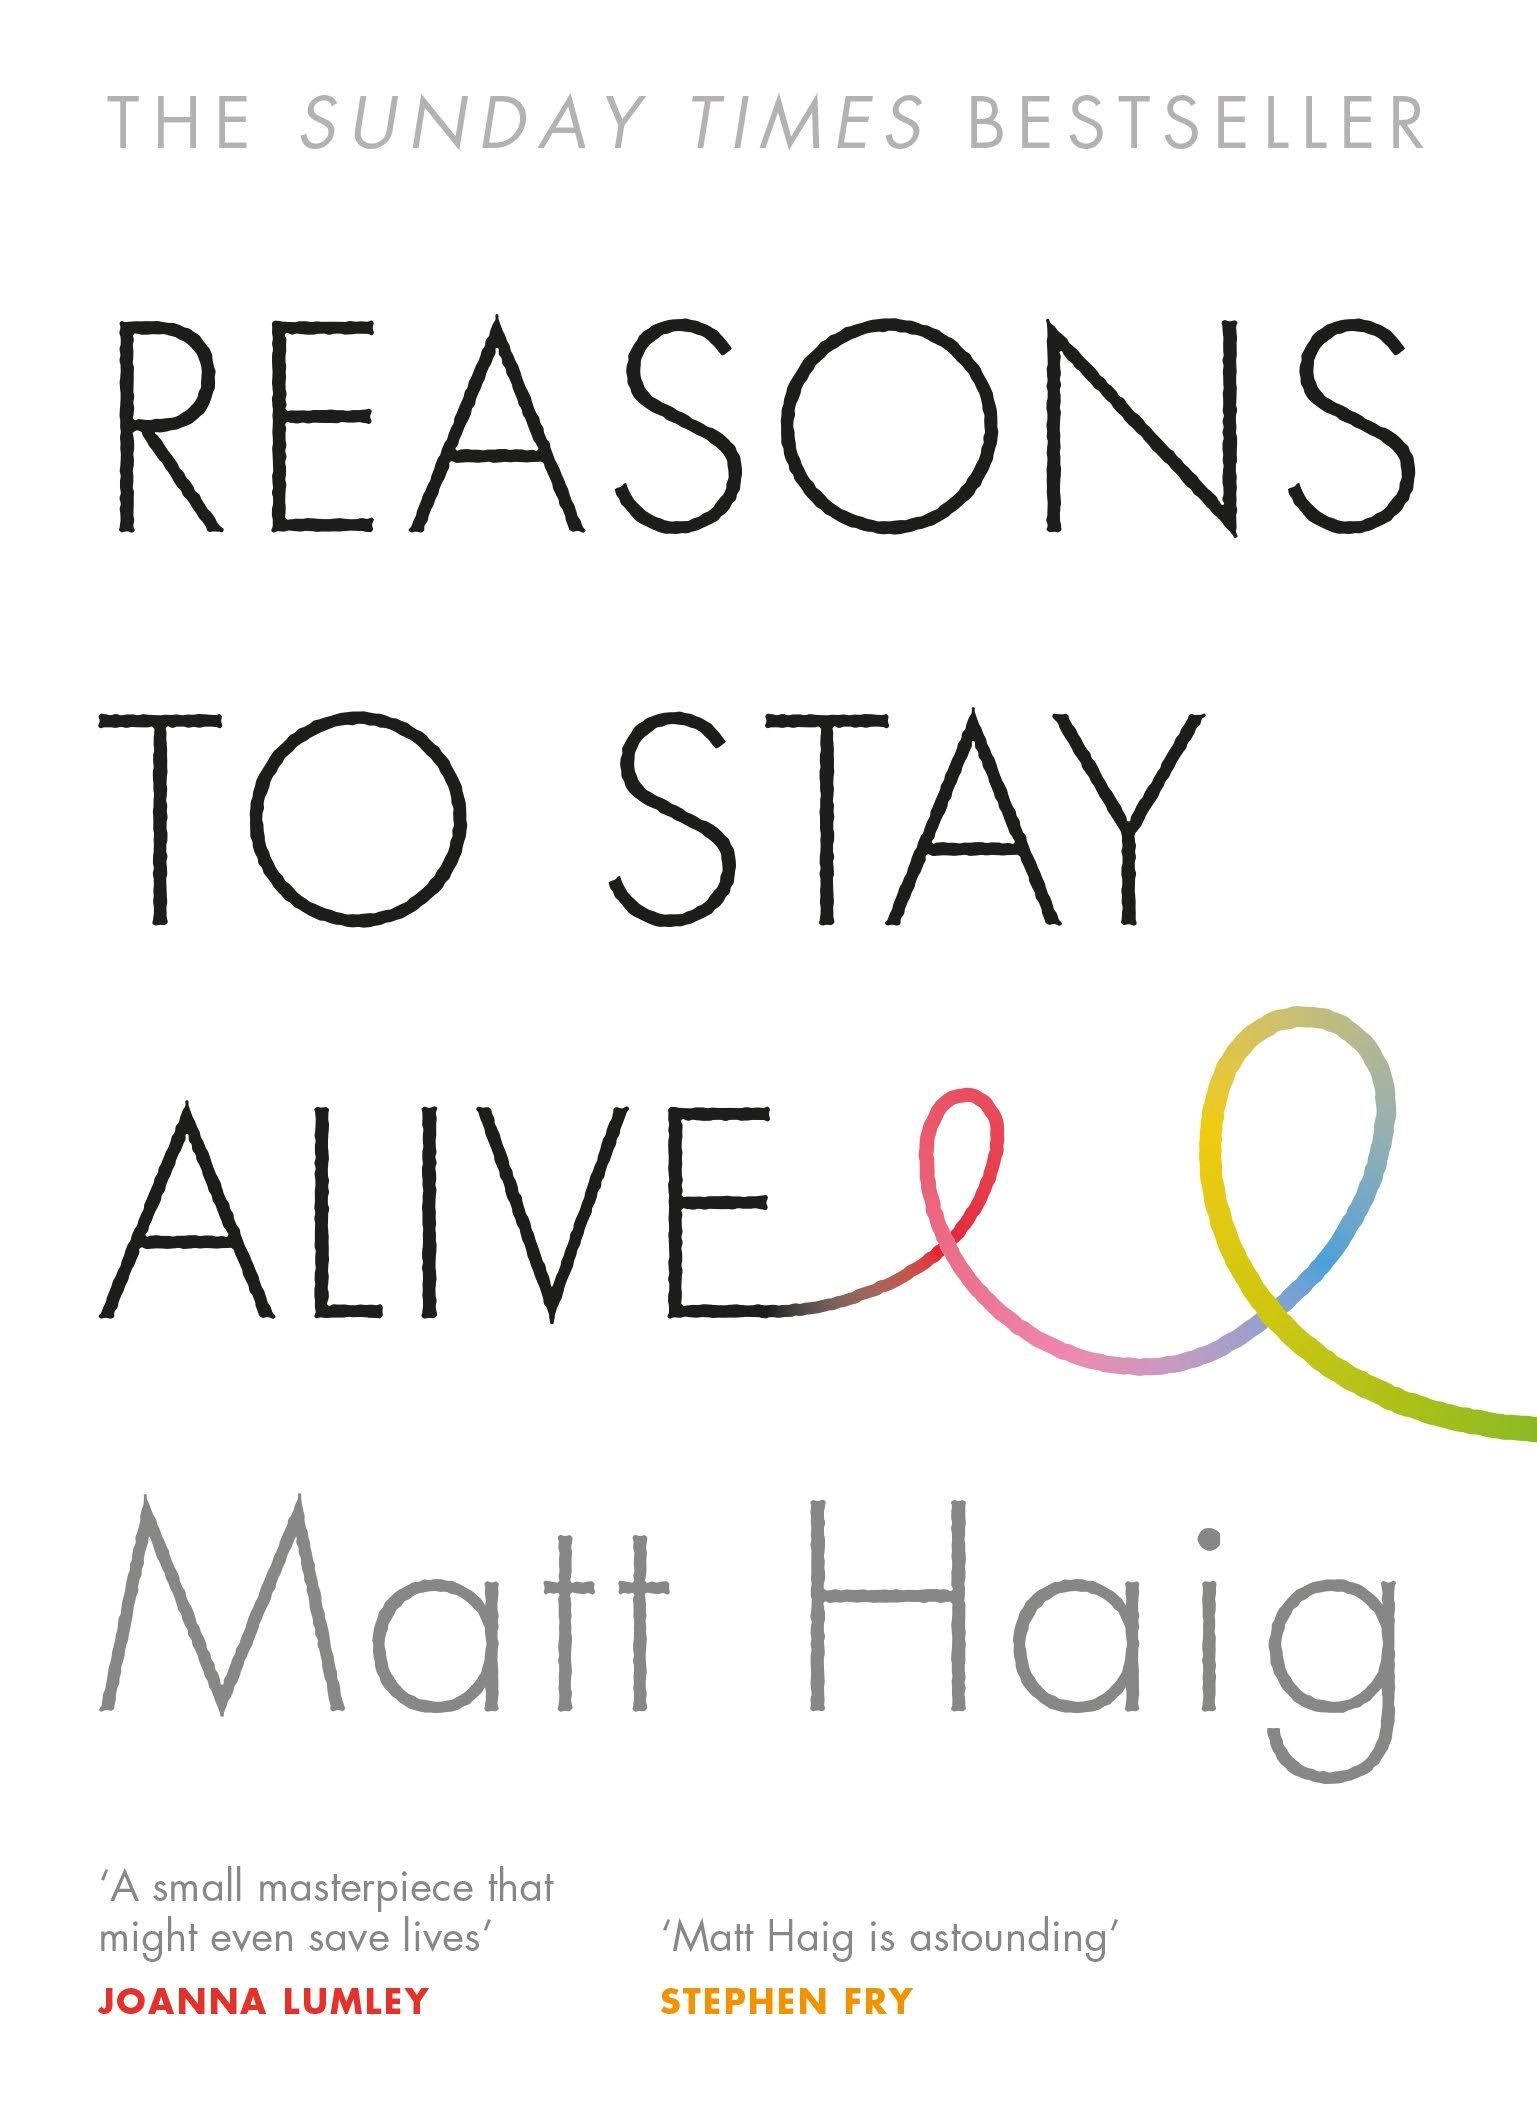 Reasons to Stay Alive - Matt Haig